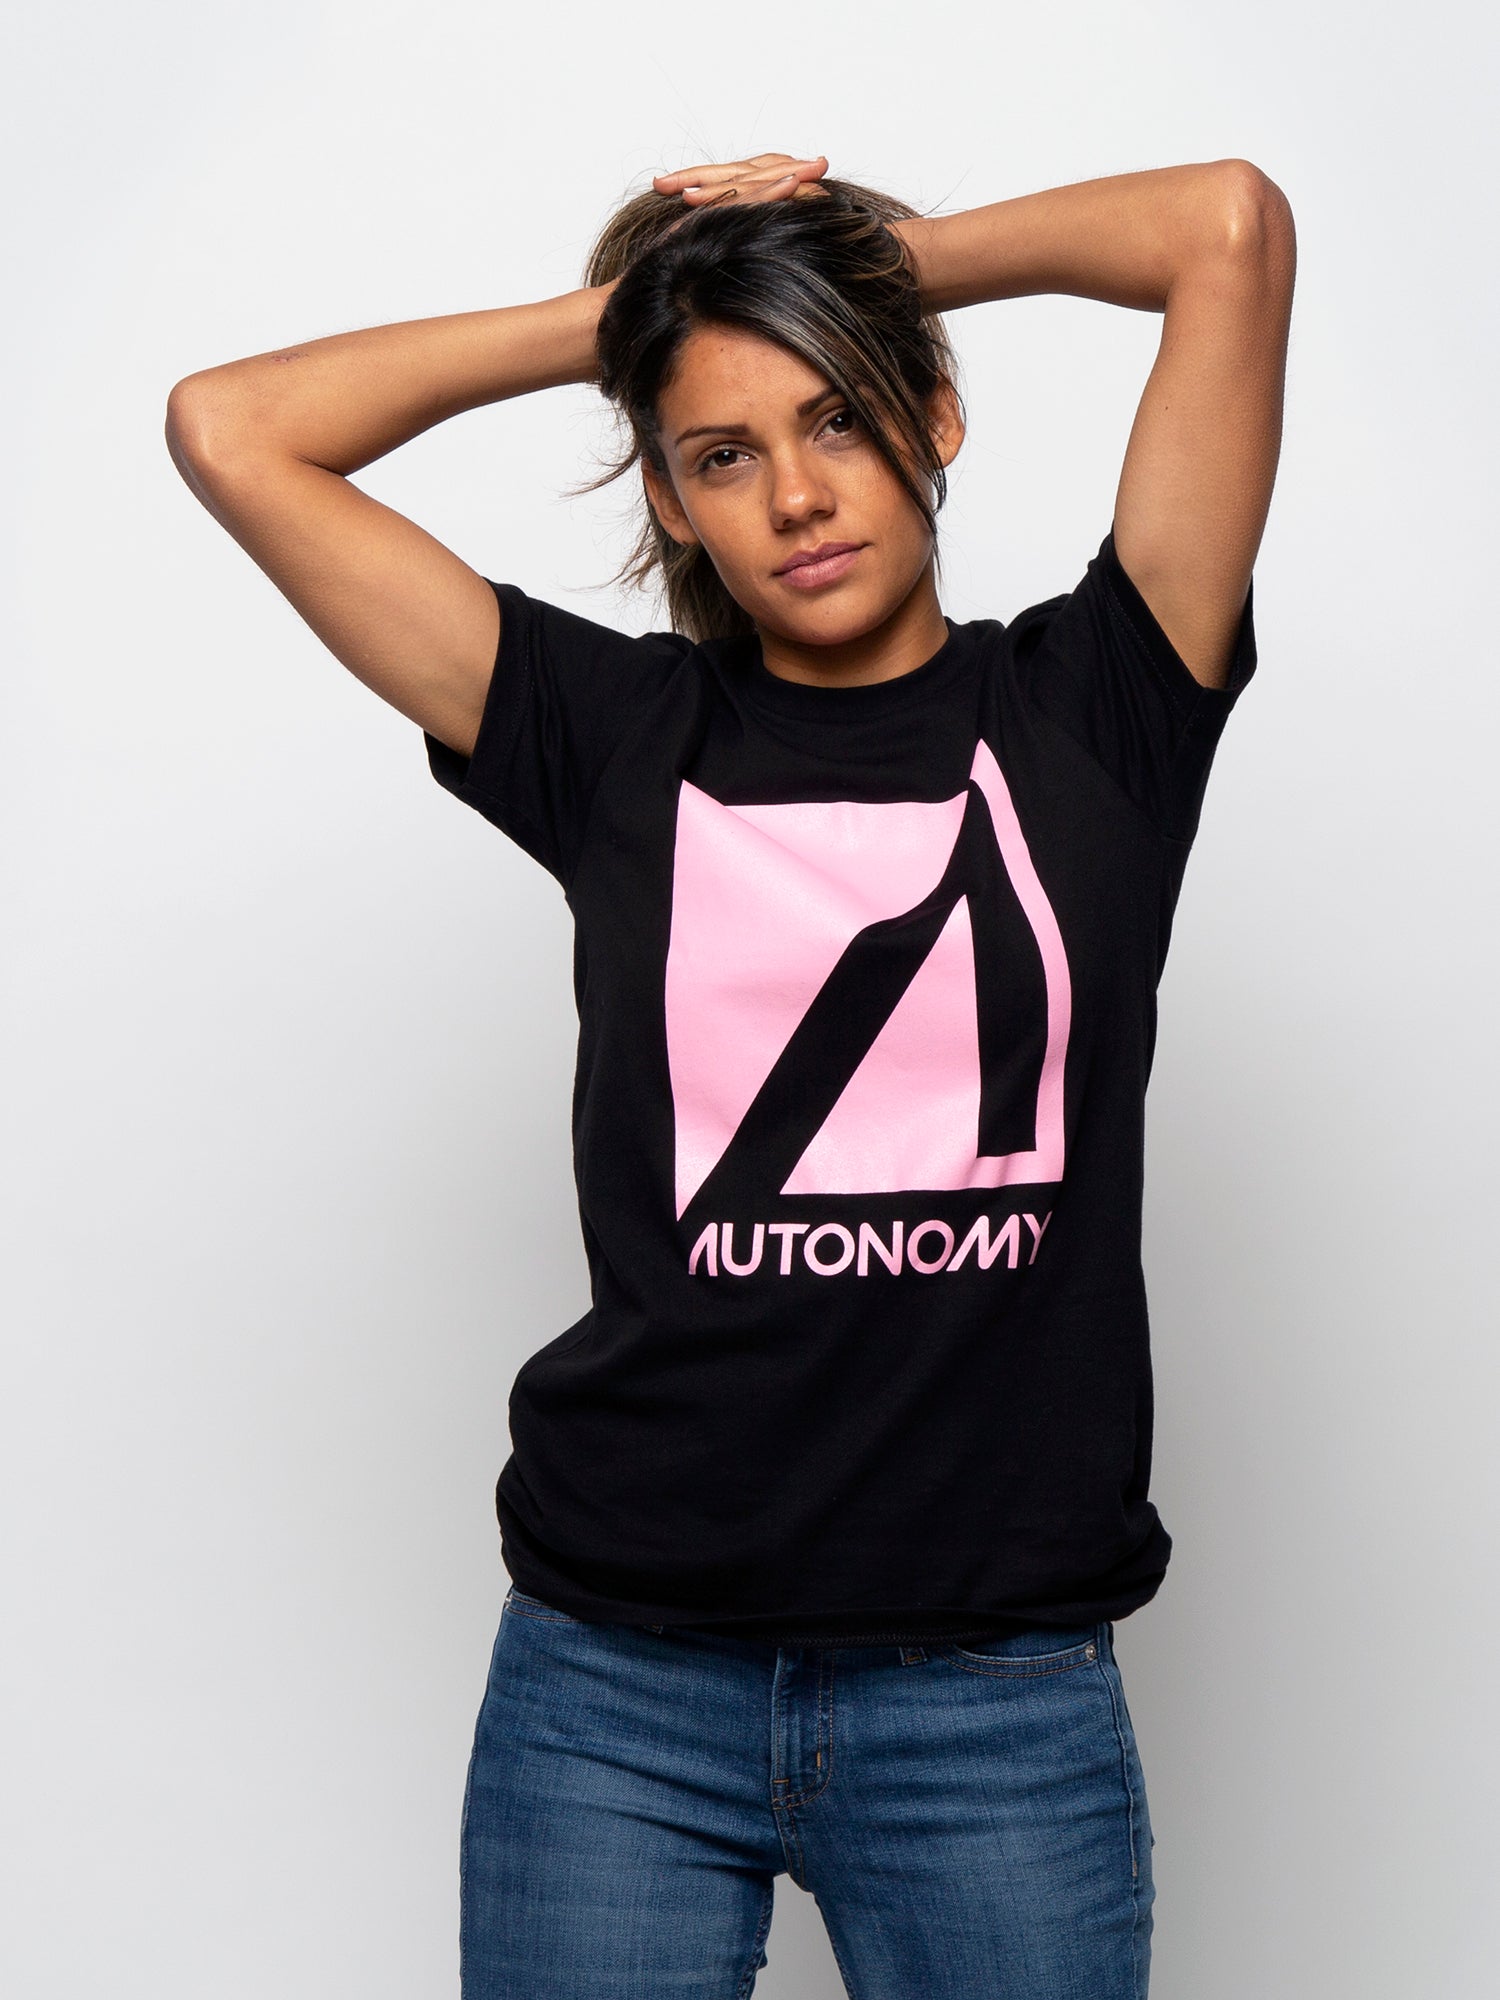 Autonomy No Comply T-shirt - Black w/Pink